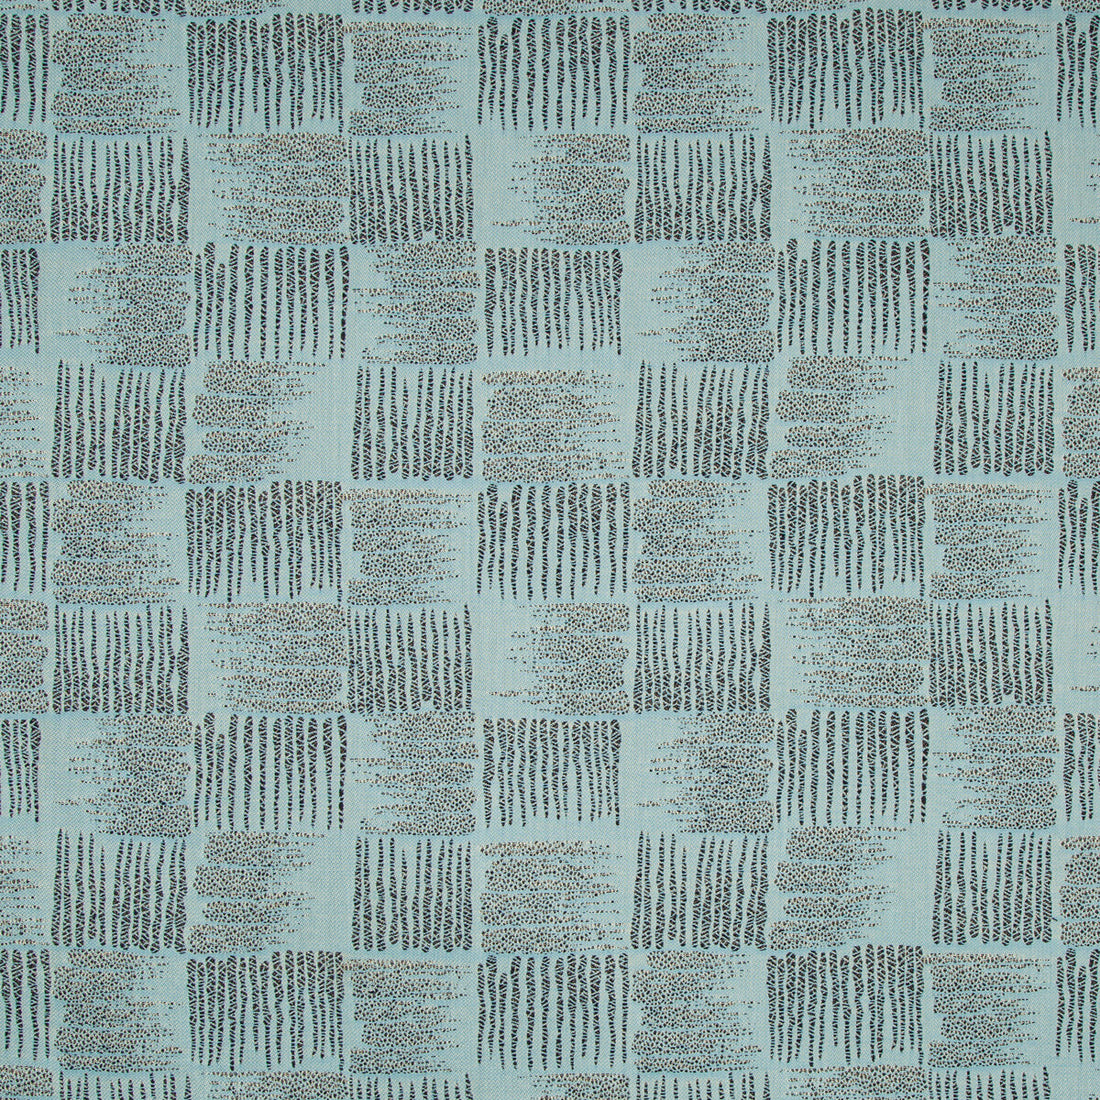 Lj Grw fabric - pattern 2019141.15.0 - by Lee Jofa Modern in the Kw Terra Firma III Indoor Outdoor collection